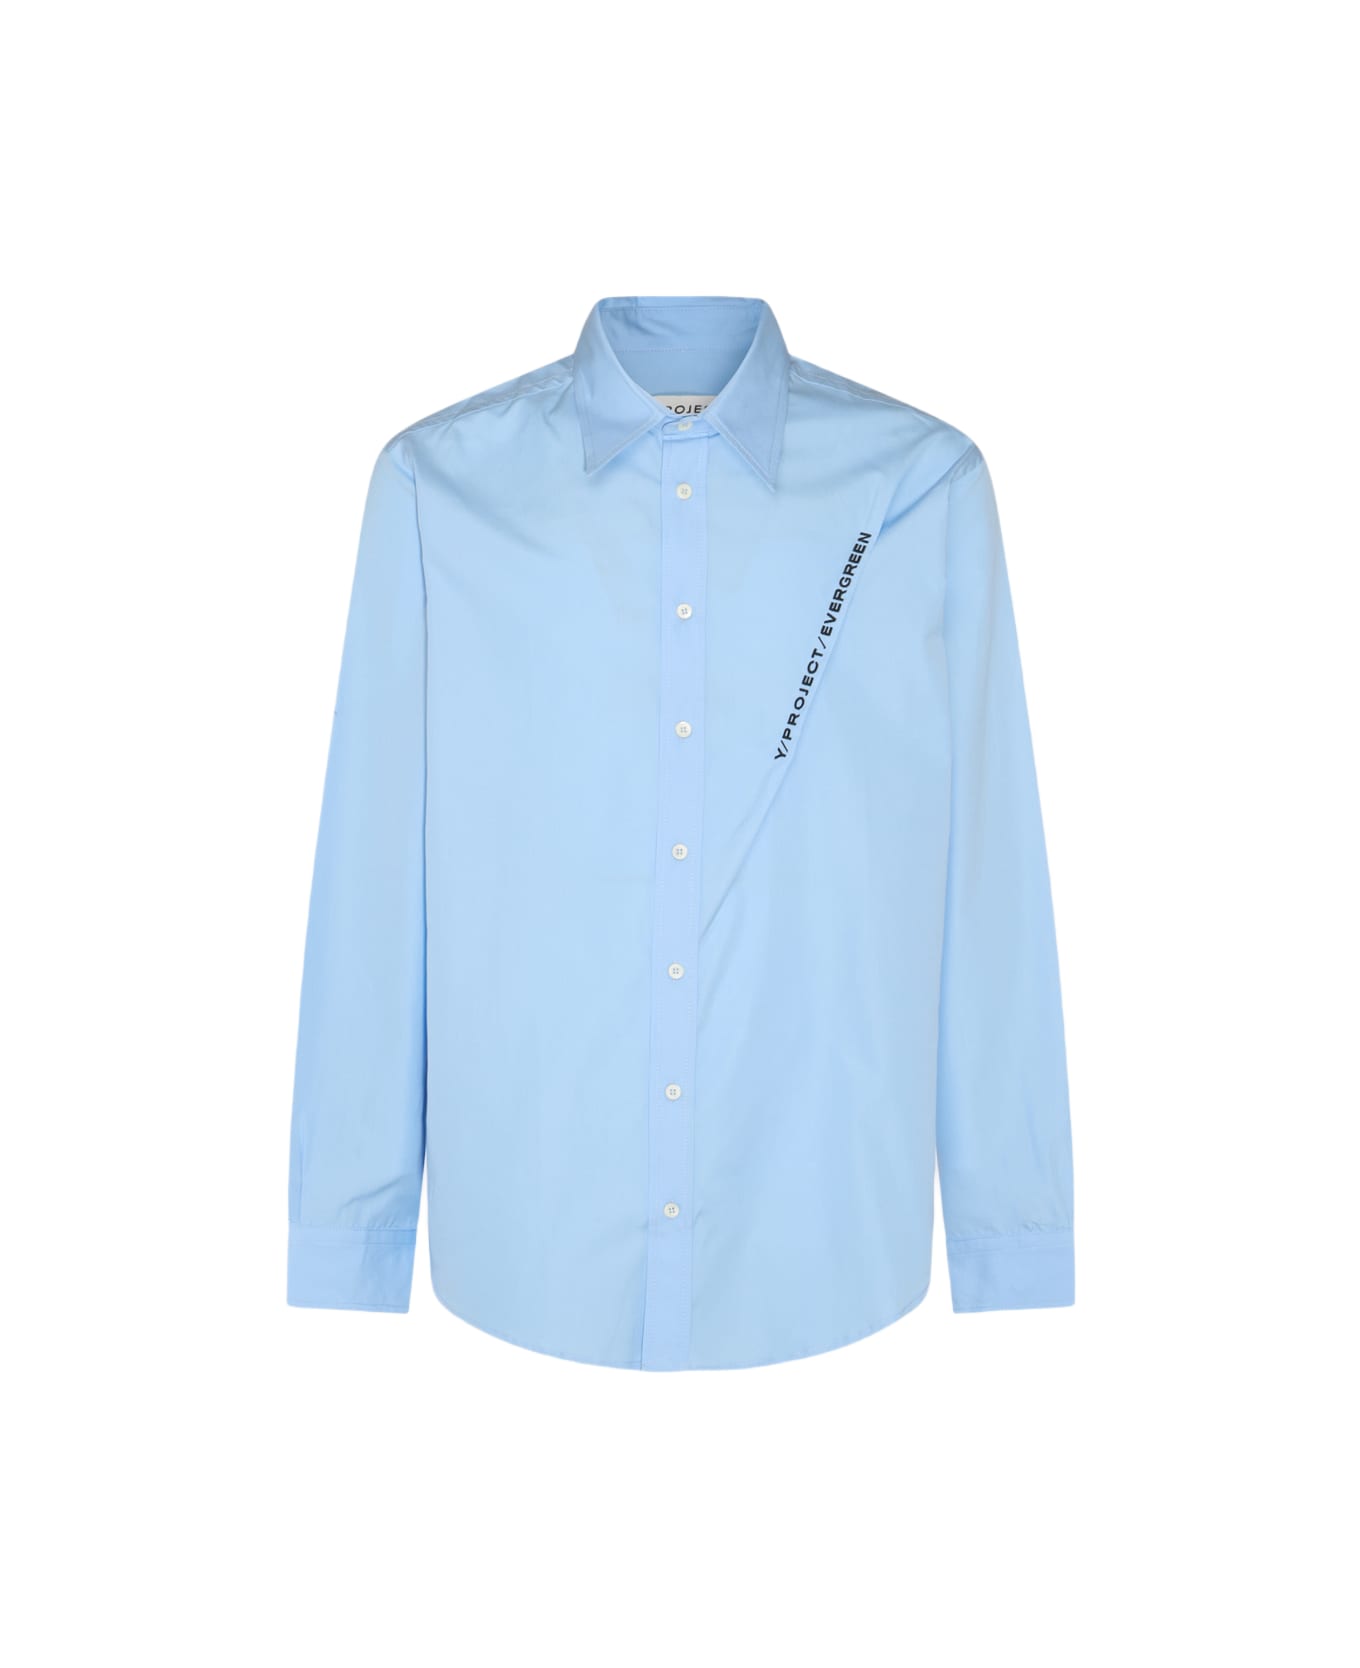 Y/Project Light Blue Cotton Shirt シャツ